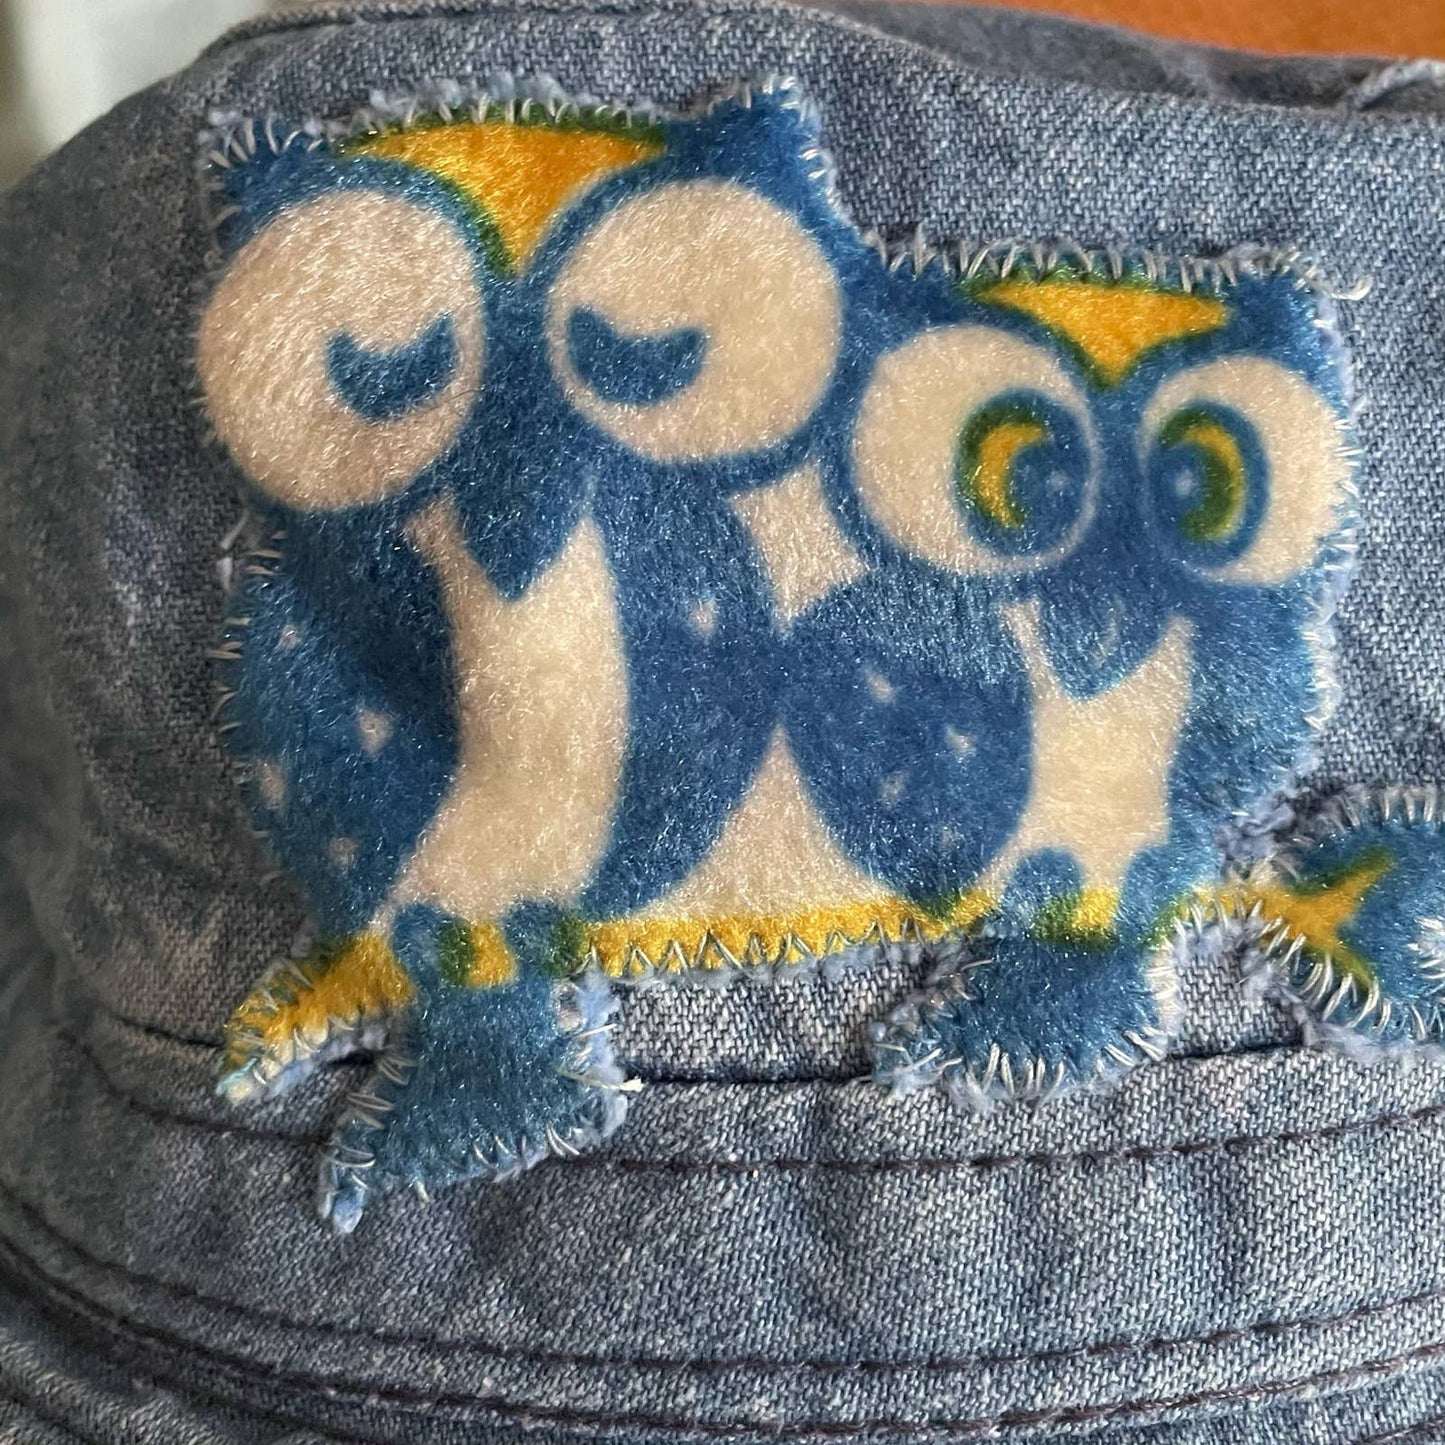 Upcycled 90s denim bucket hat with velveteen owl appliqué